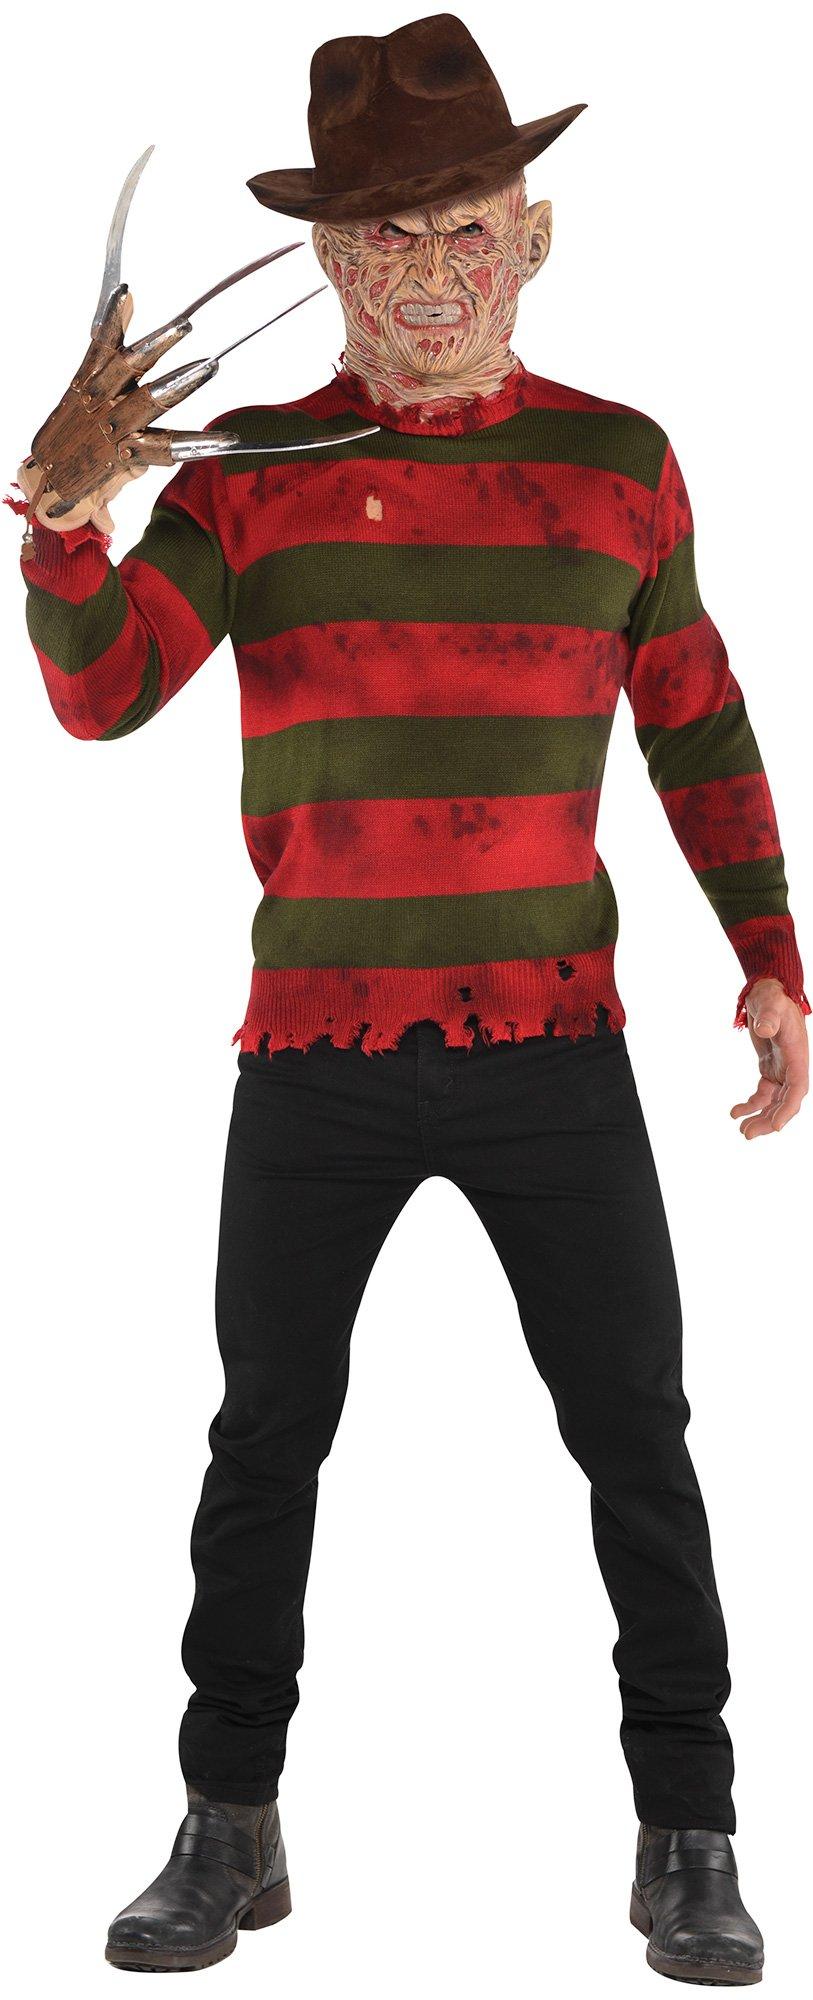 Freddy Krueger Couples Costumes - A Nightmare on Elm Street